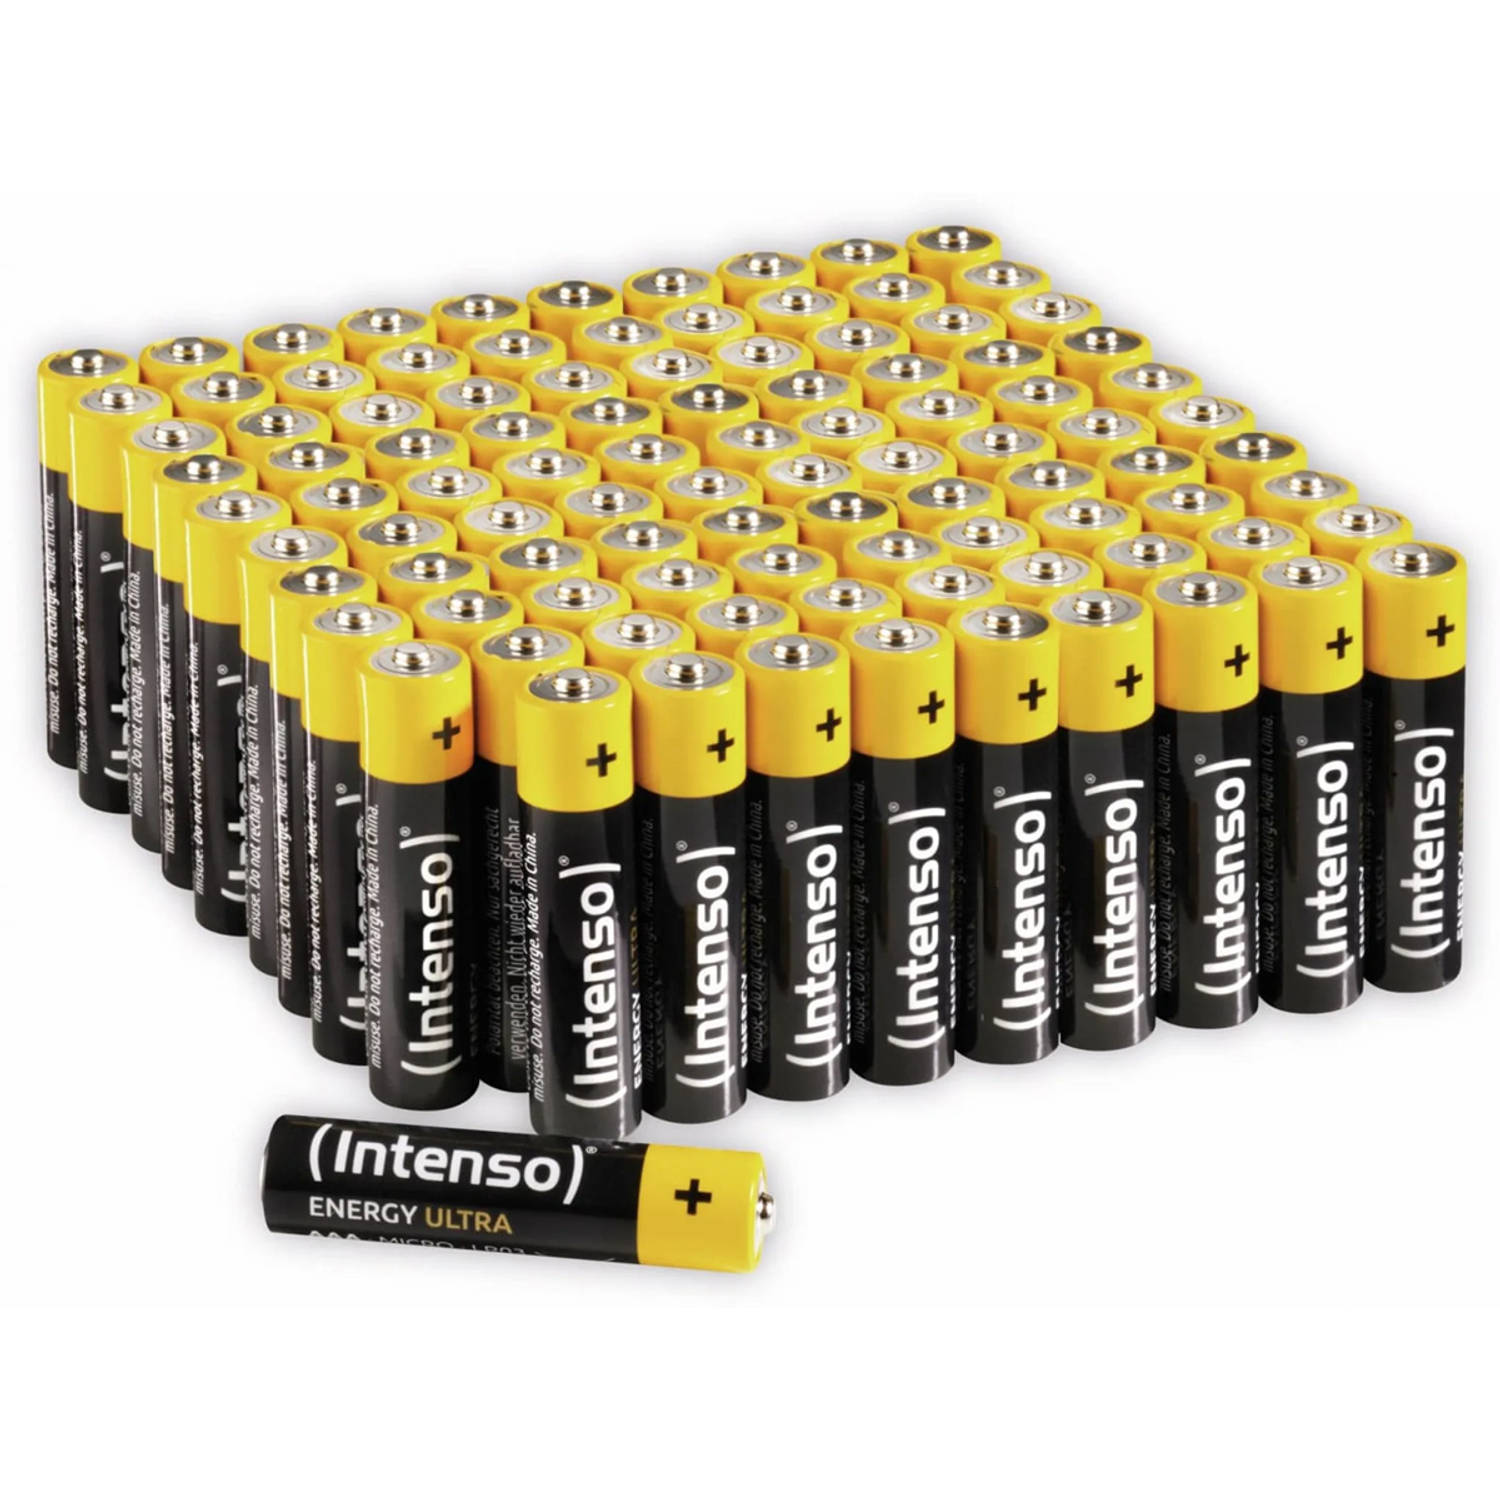 (Intenso) Energy Ultra batterijen AAA / LR03 - 100 stuks megapack (7501910MP)